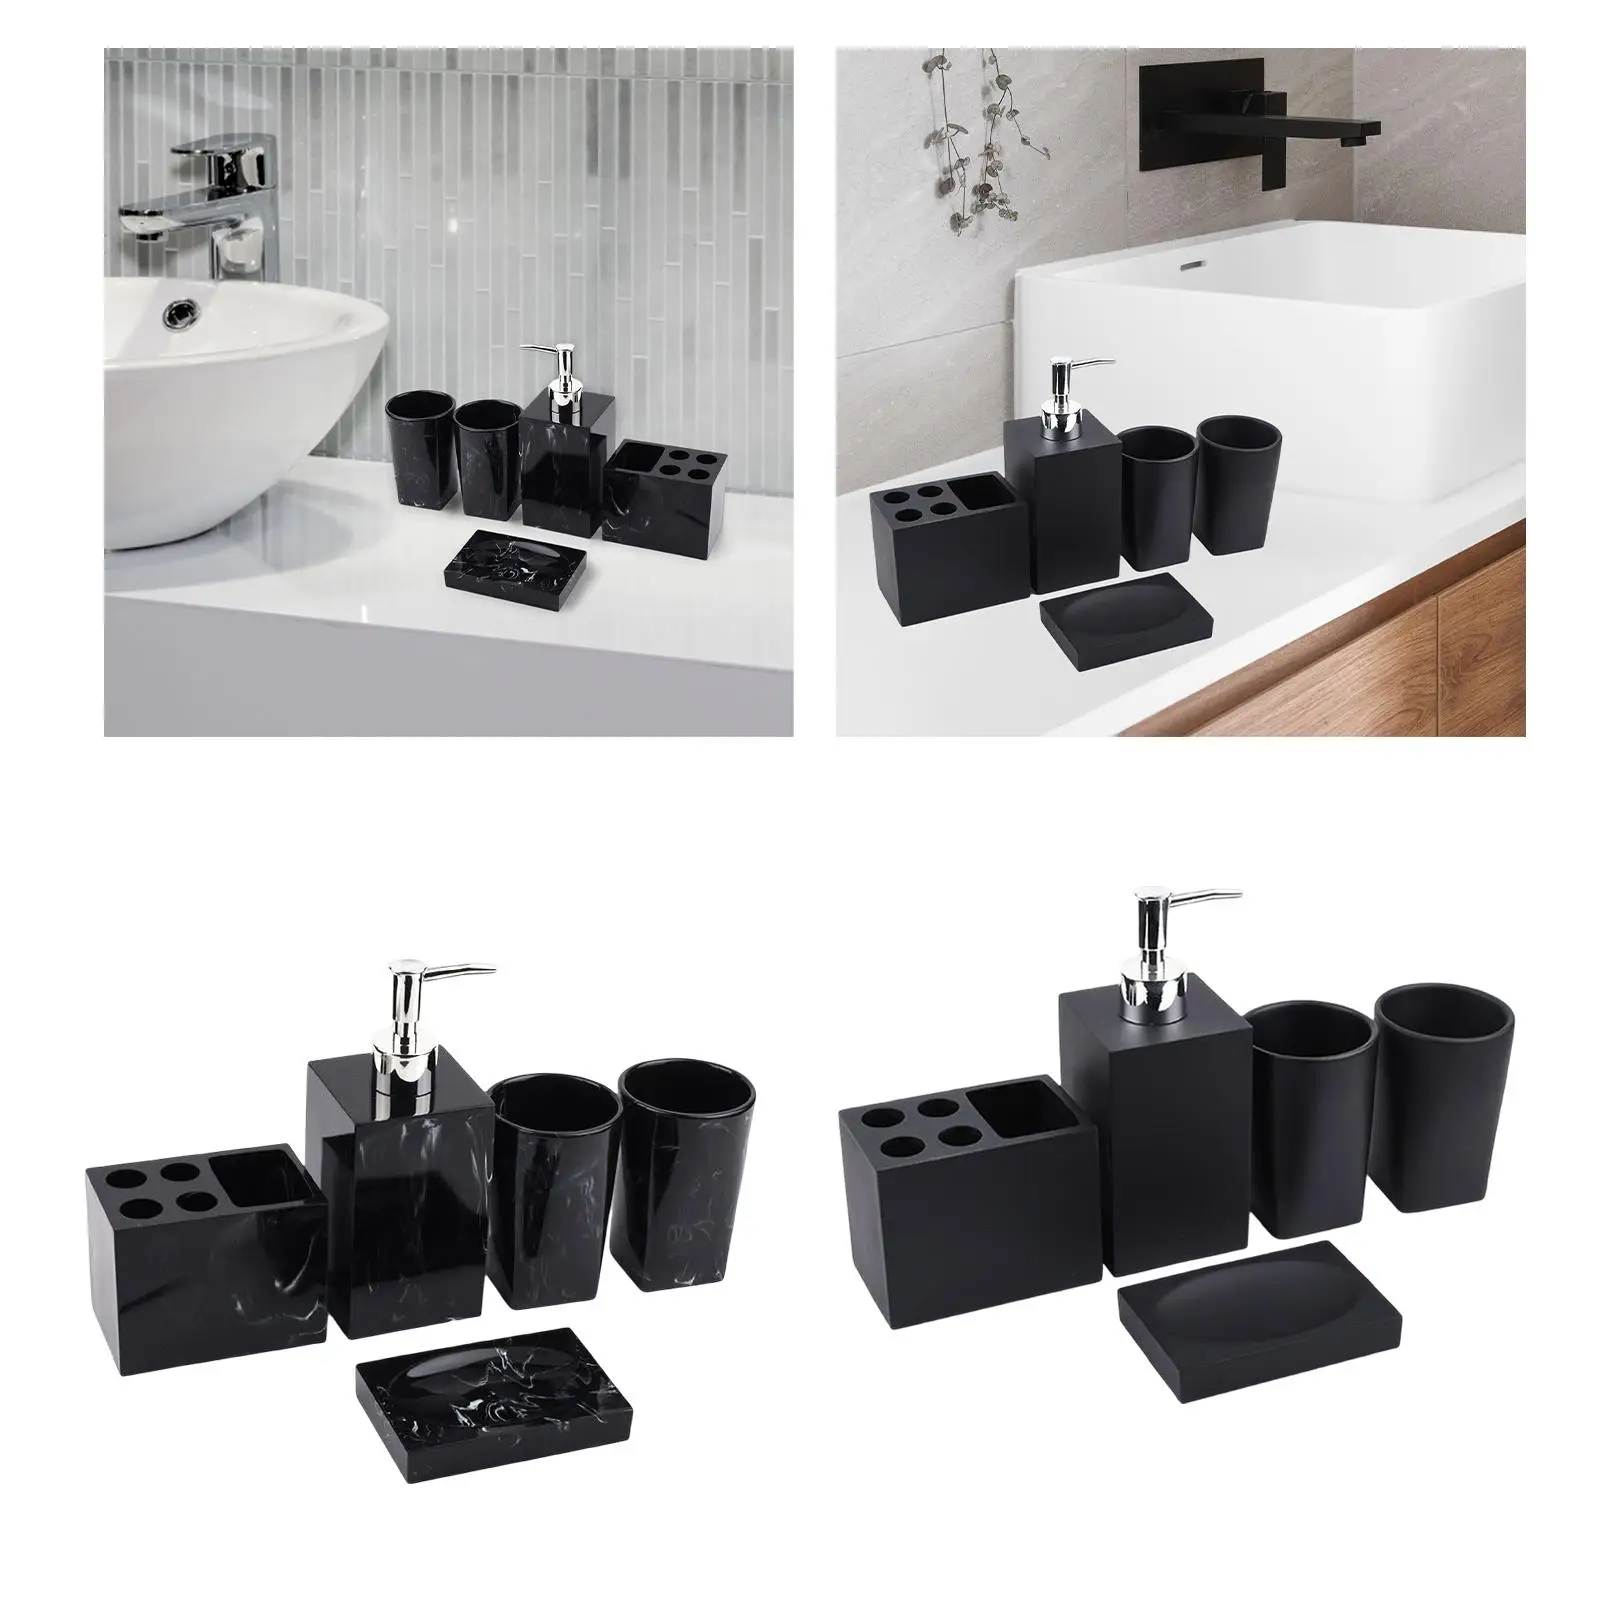 5 Pieces Bath Set Polyresin Ensemble Marble Bathroom Accessories for Apartment Home